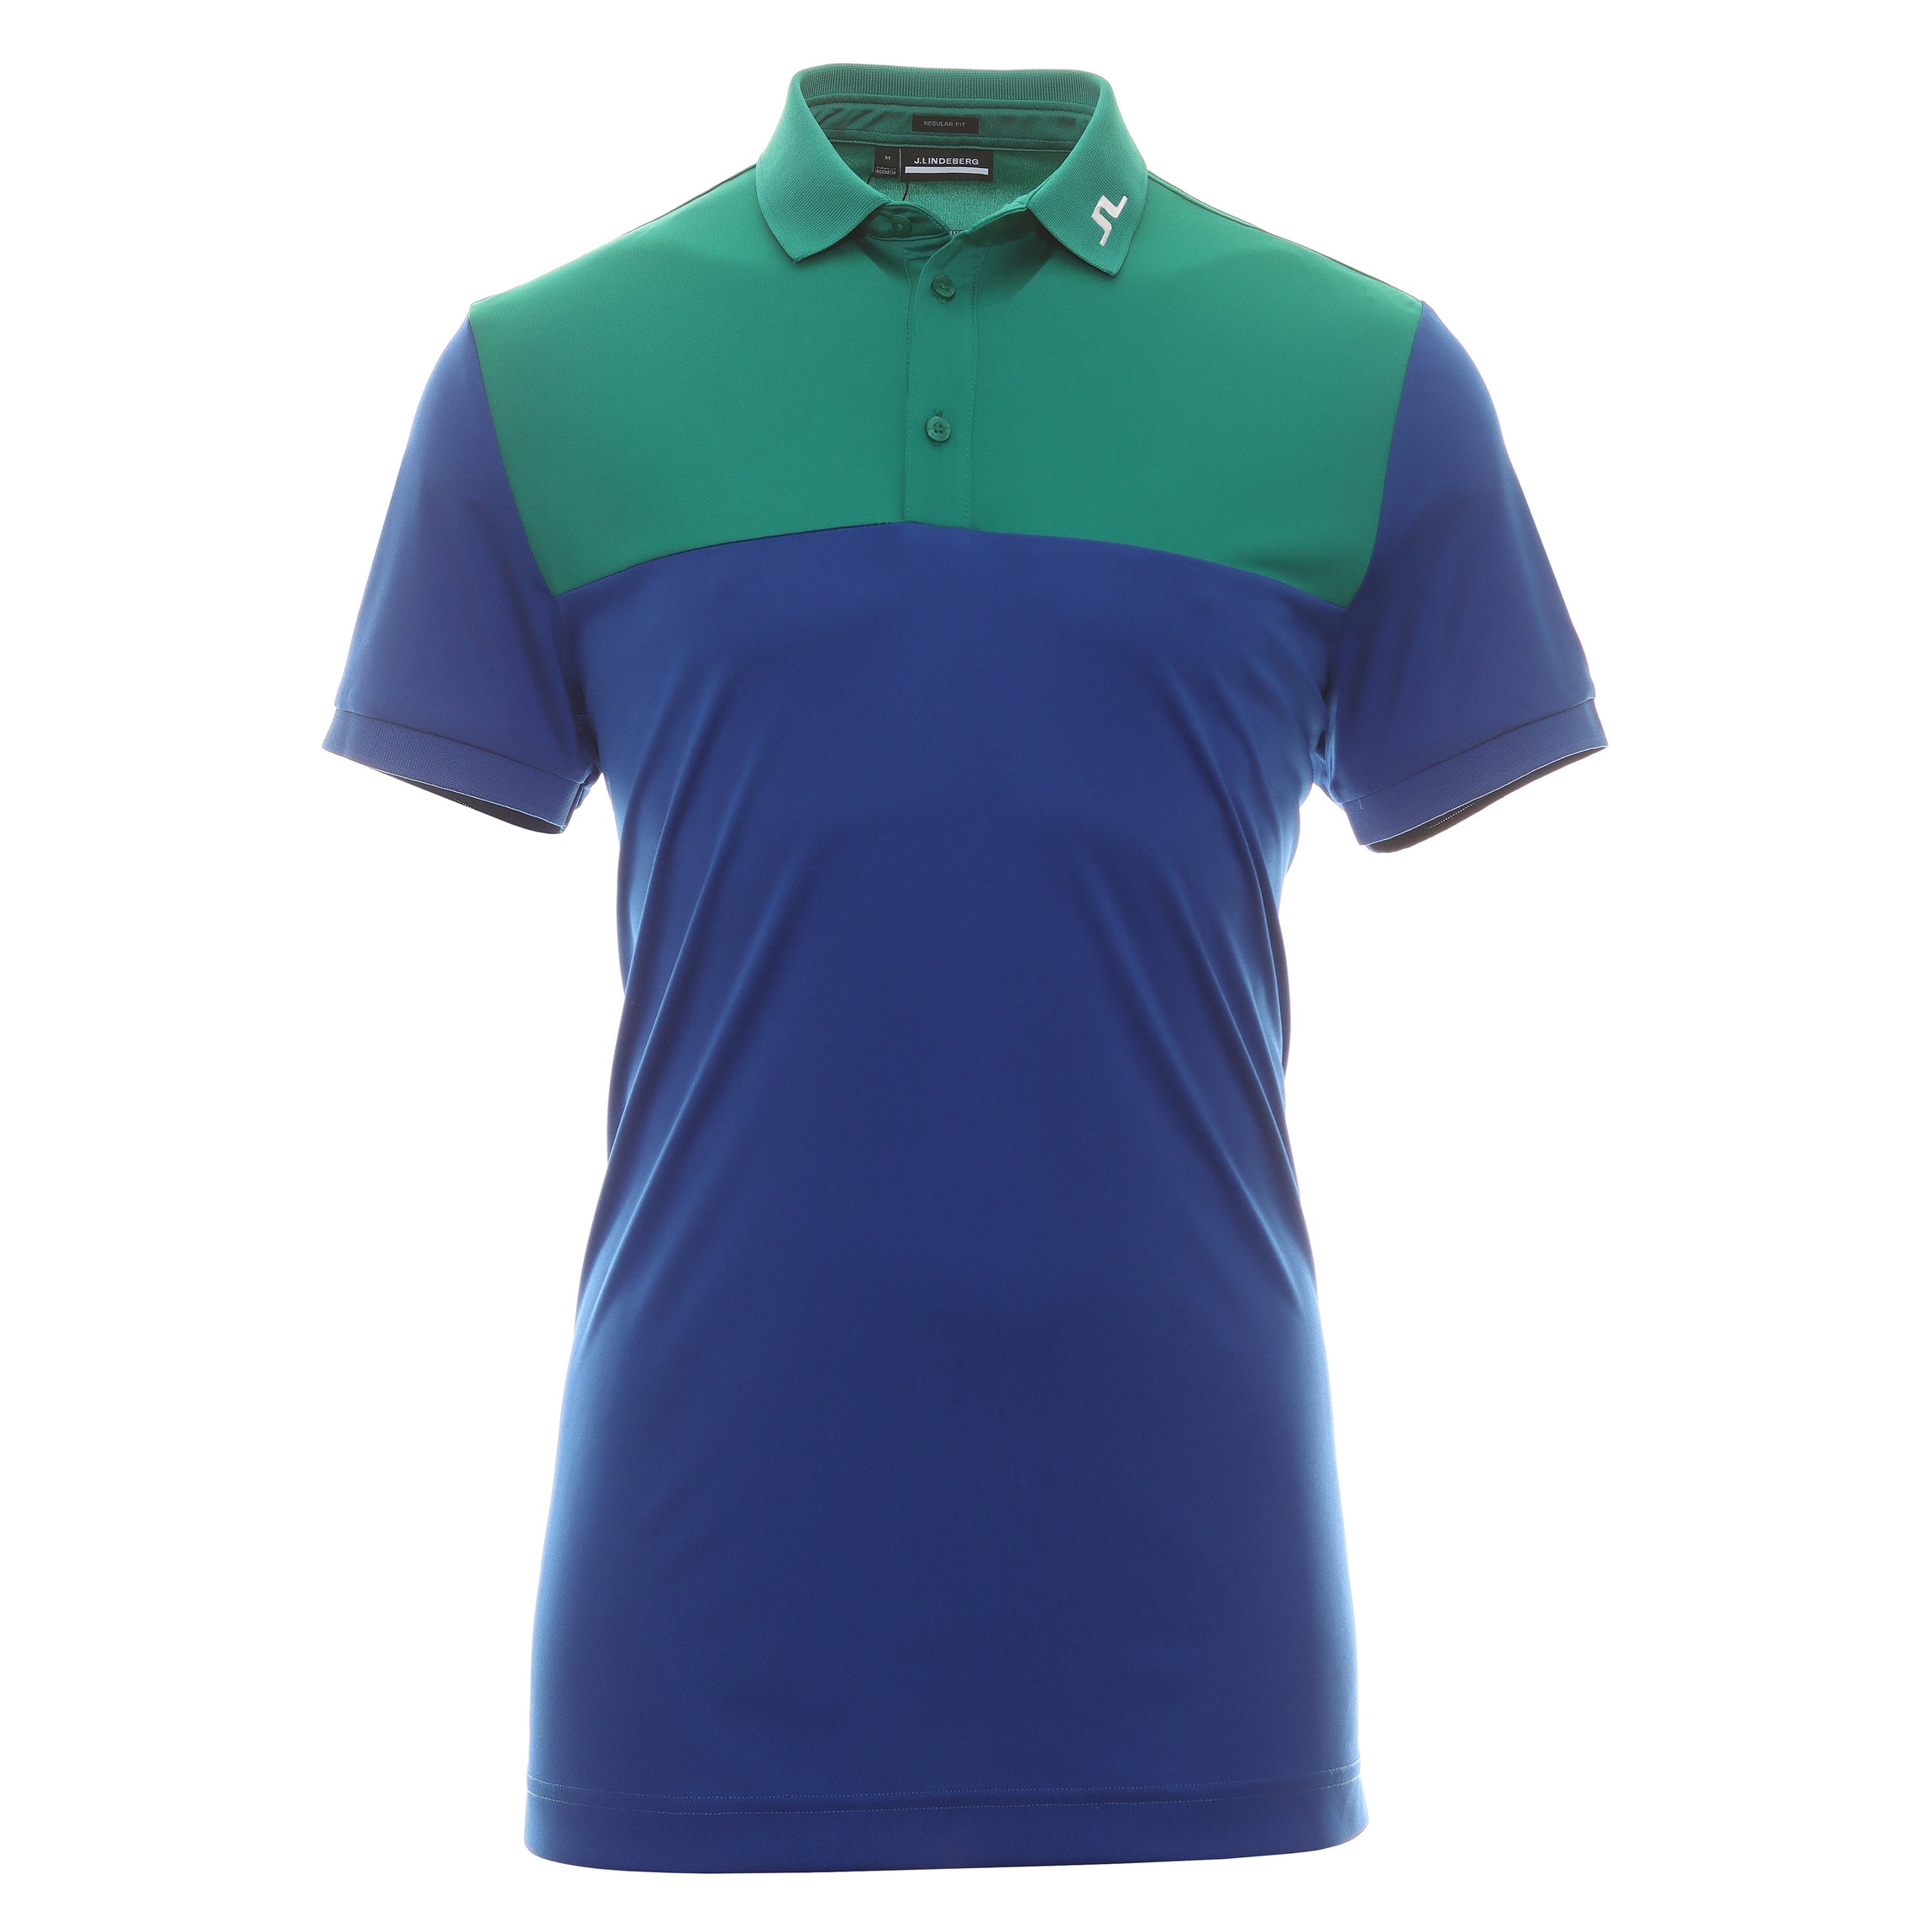 Jeff GMJT08561 | Shirt | M501 Polo FW23 Golf Function18 Proud Peacock J.Lindeberg Restrictedgs